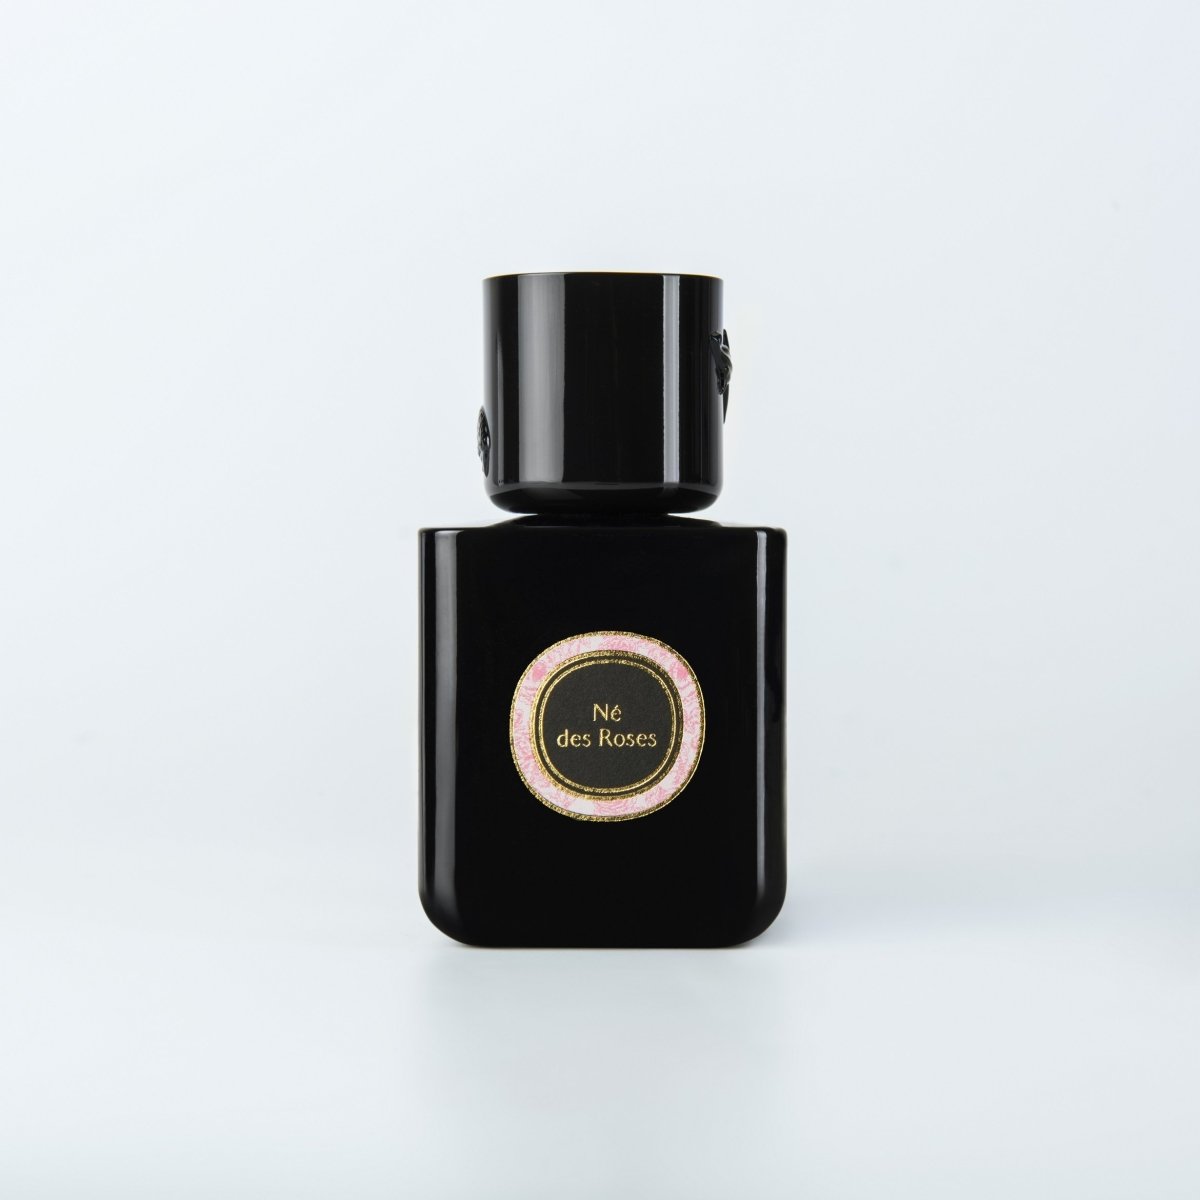 SABÉ MASSON Soft Perfume Liquide - Ne des Roses 法國白香水 - 玫瑰庭園 [50ml] - MINT Organics